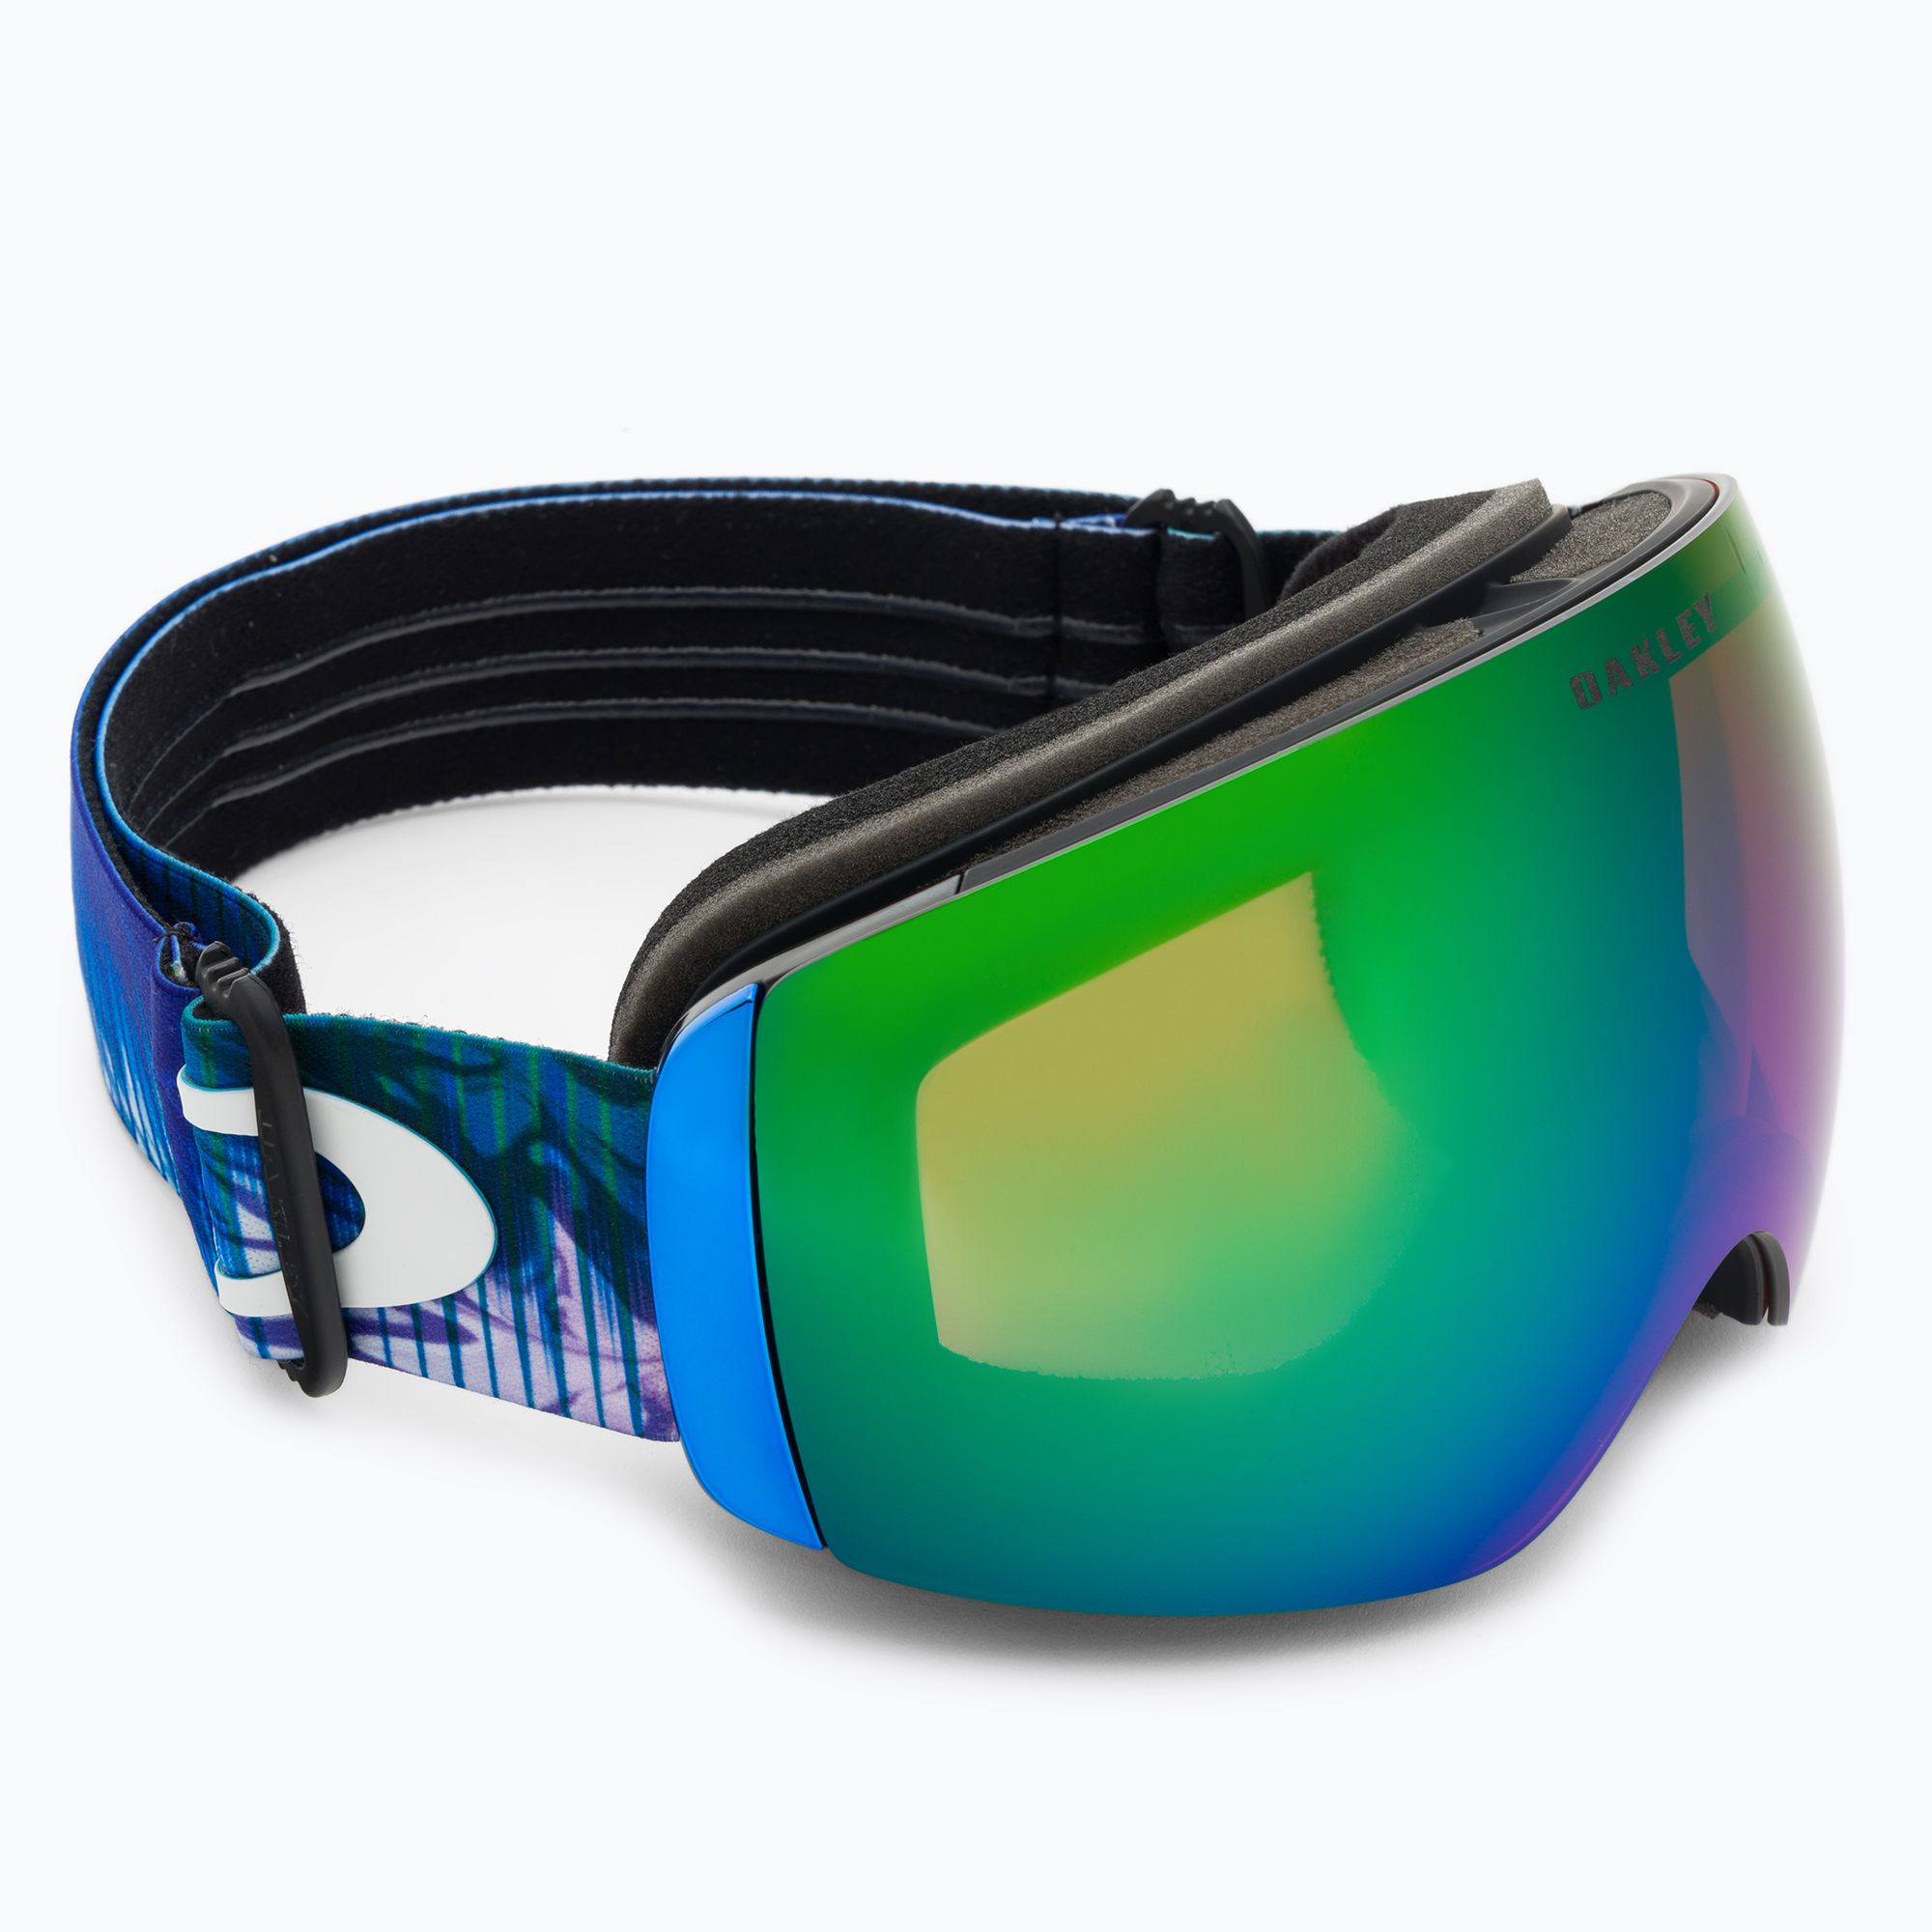 Oakley Flight Deck mikaela shiffrin/prizm snow iridium ski goggles - Sportano.com